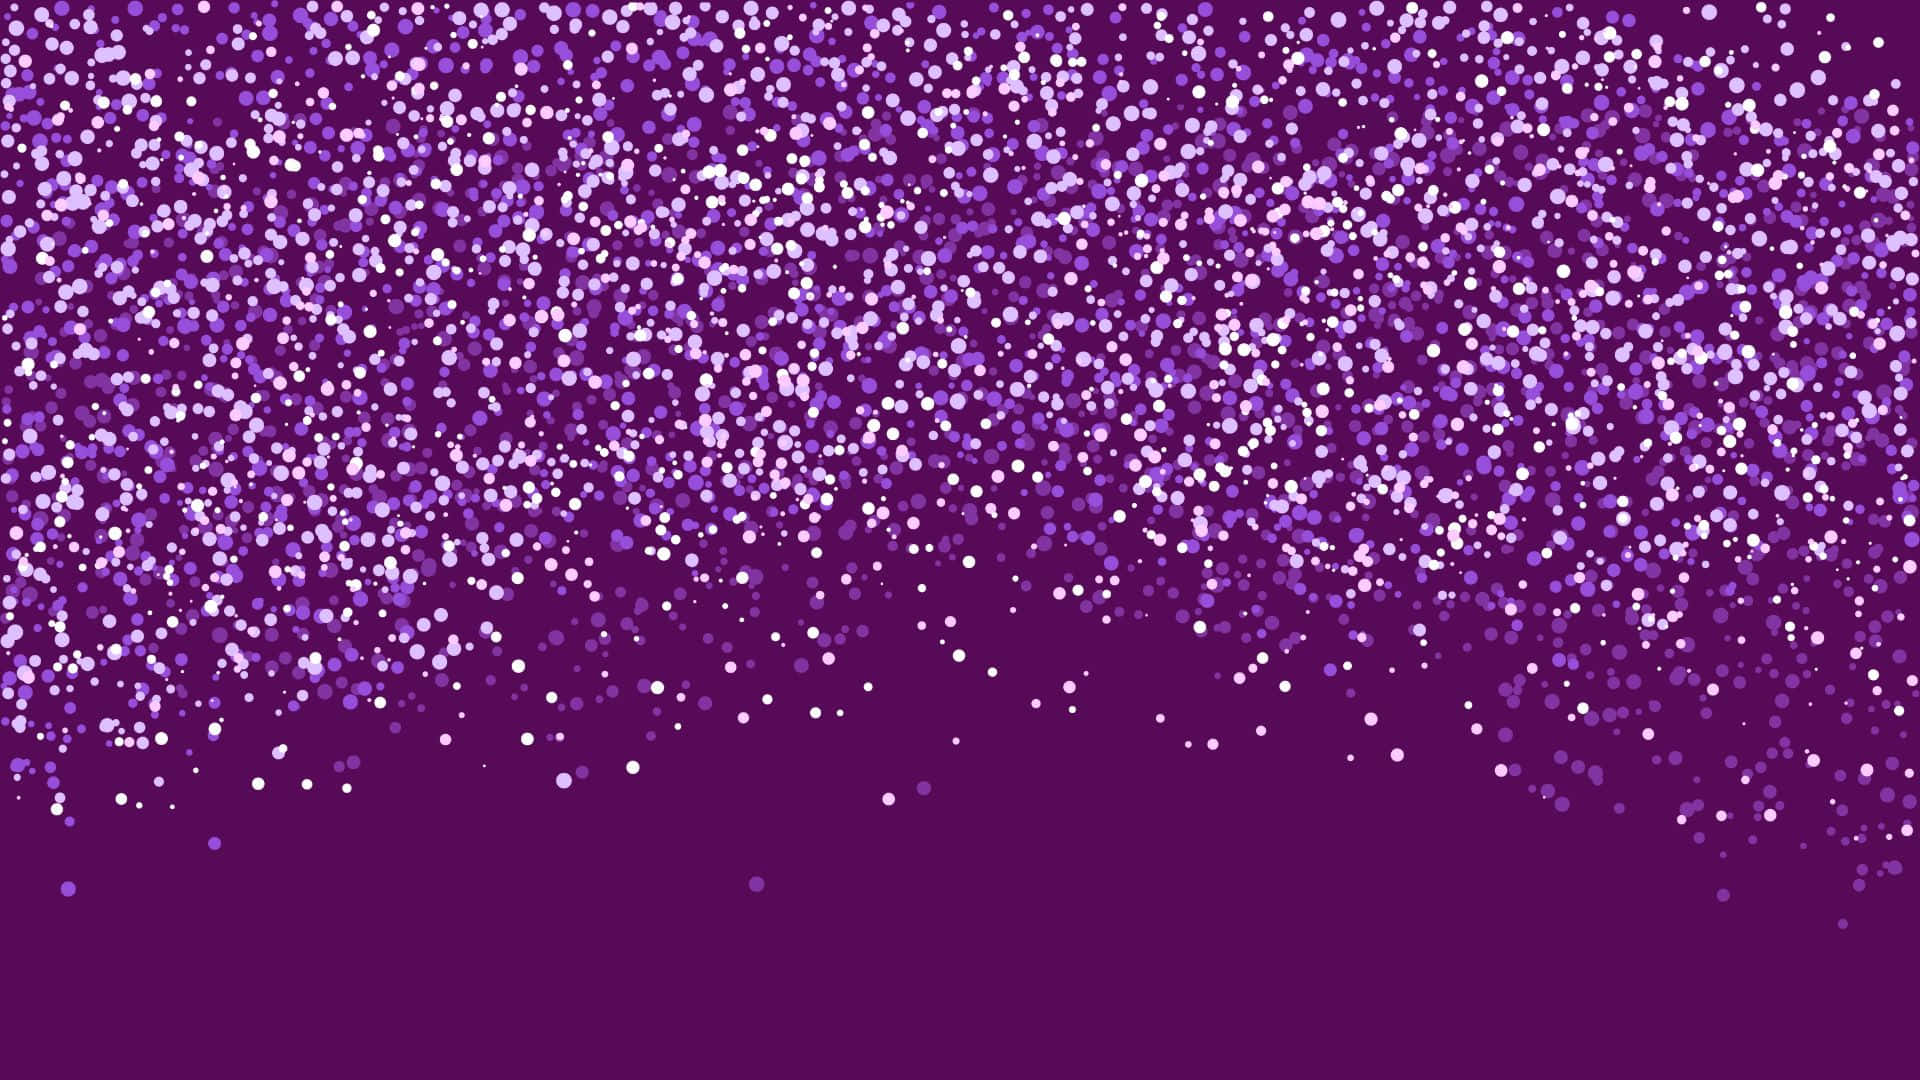 100+] Purple Sparkle Backgrounds